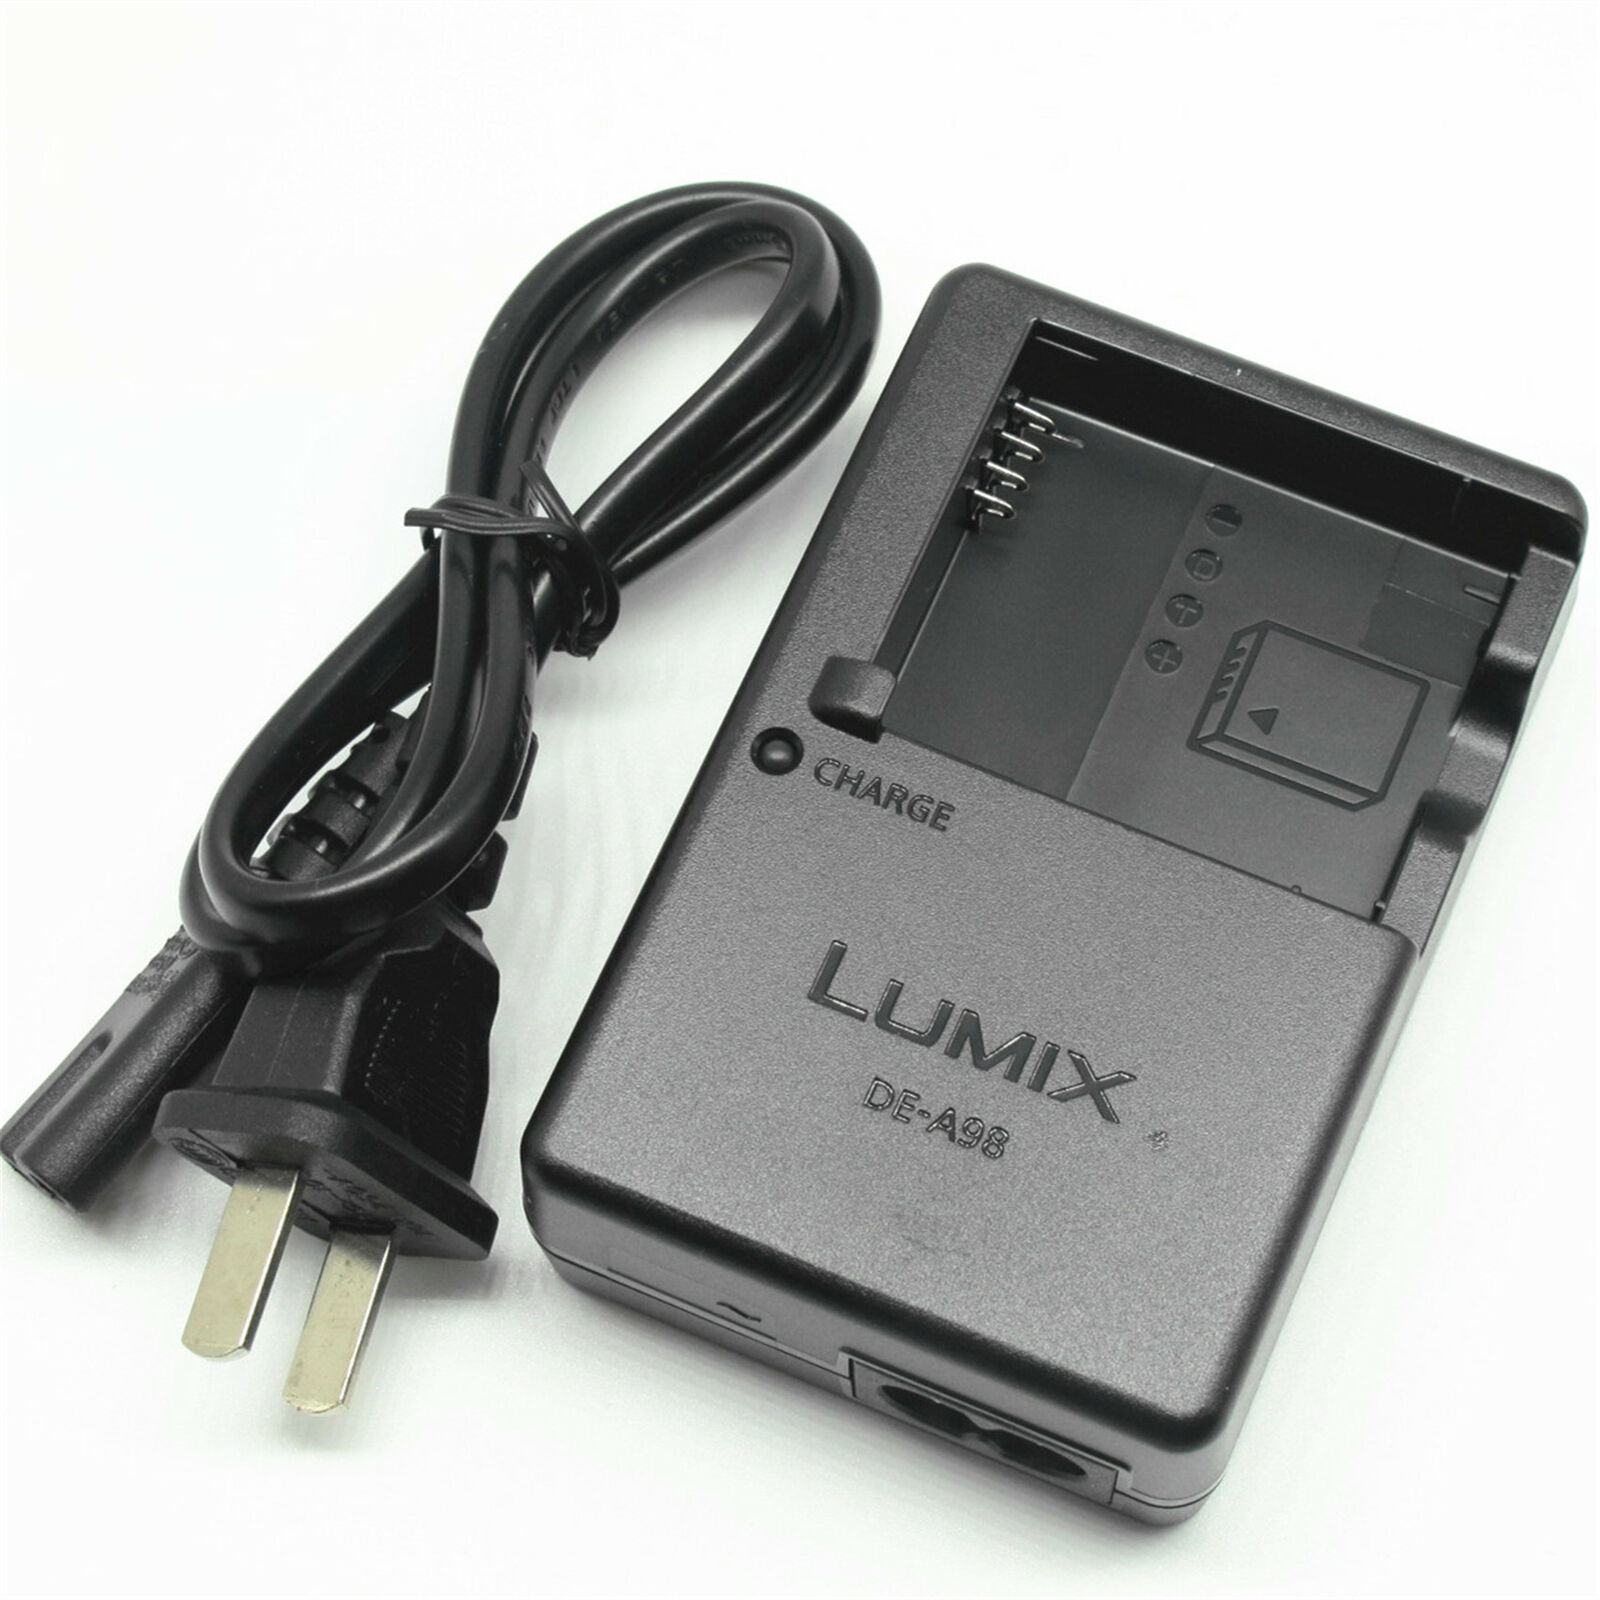 Opmuntring lige ud Fremmedgøre Original Panasonic DE-A98 charger For LX100 LX15 GX85 GM5 DMW-BLG10 BLE9  battery | eBay